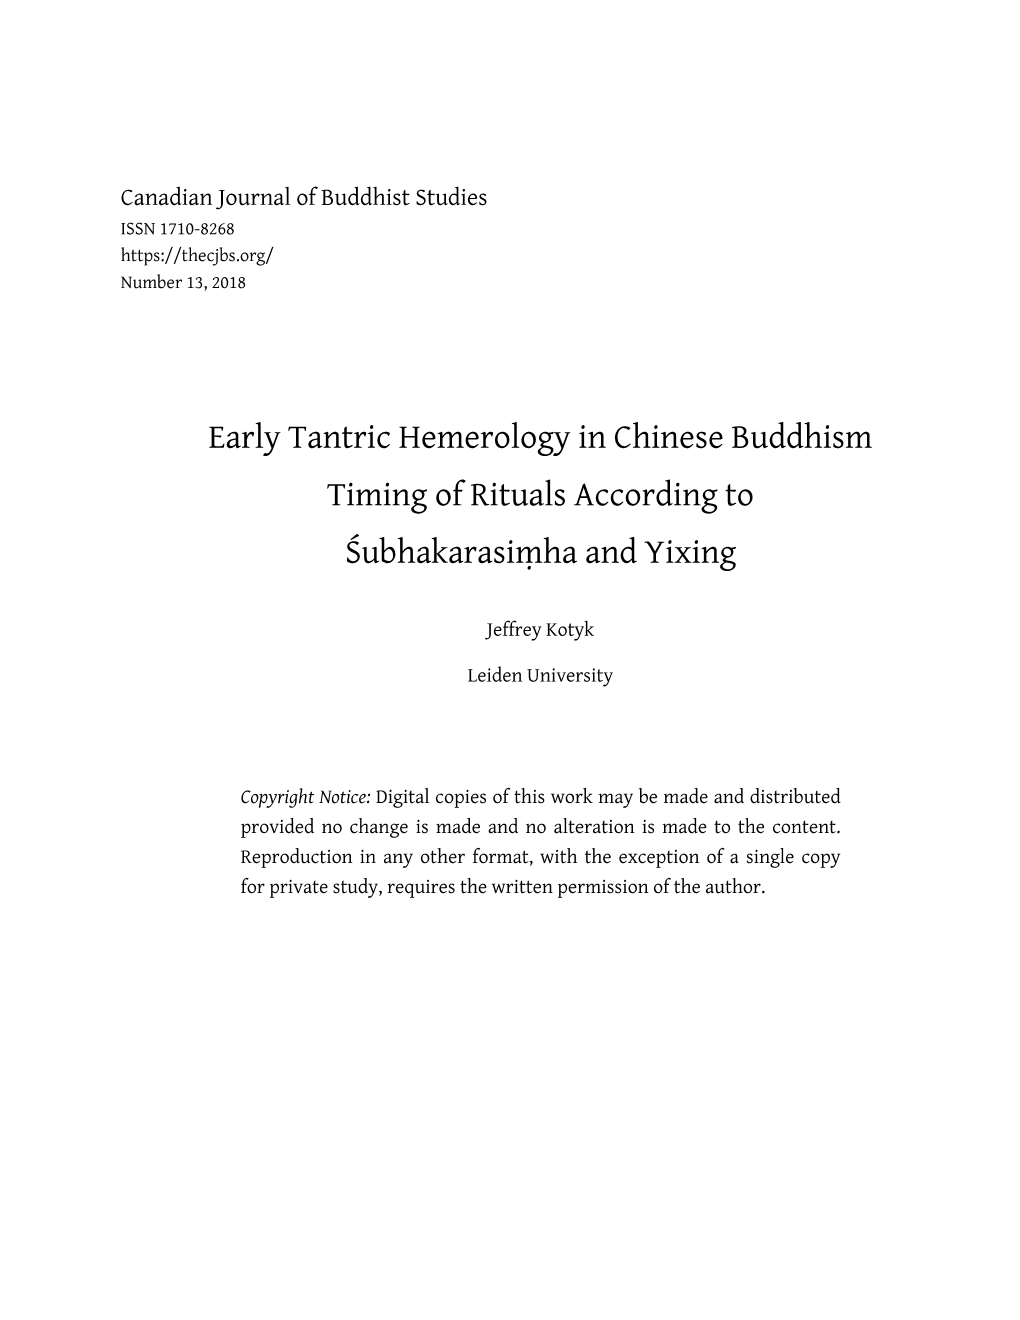 Early Tantric Hemerology in Chinese Buddhism Timing of Rituals According to Śubhakarasiṃha and Yixing